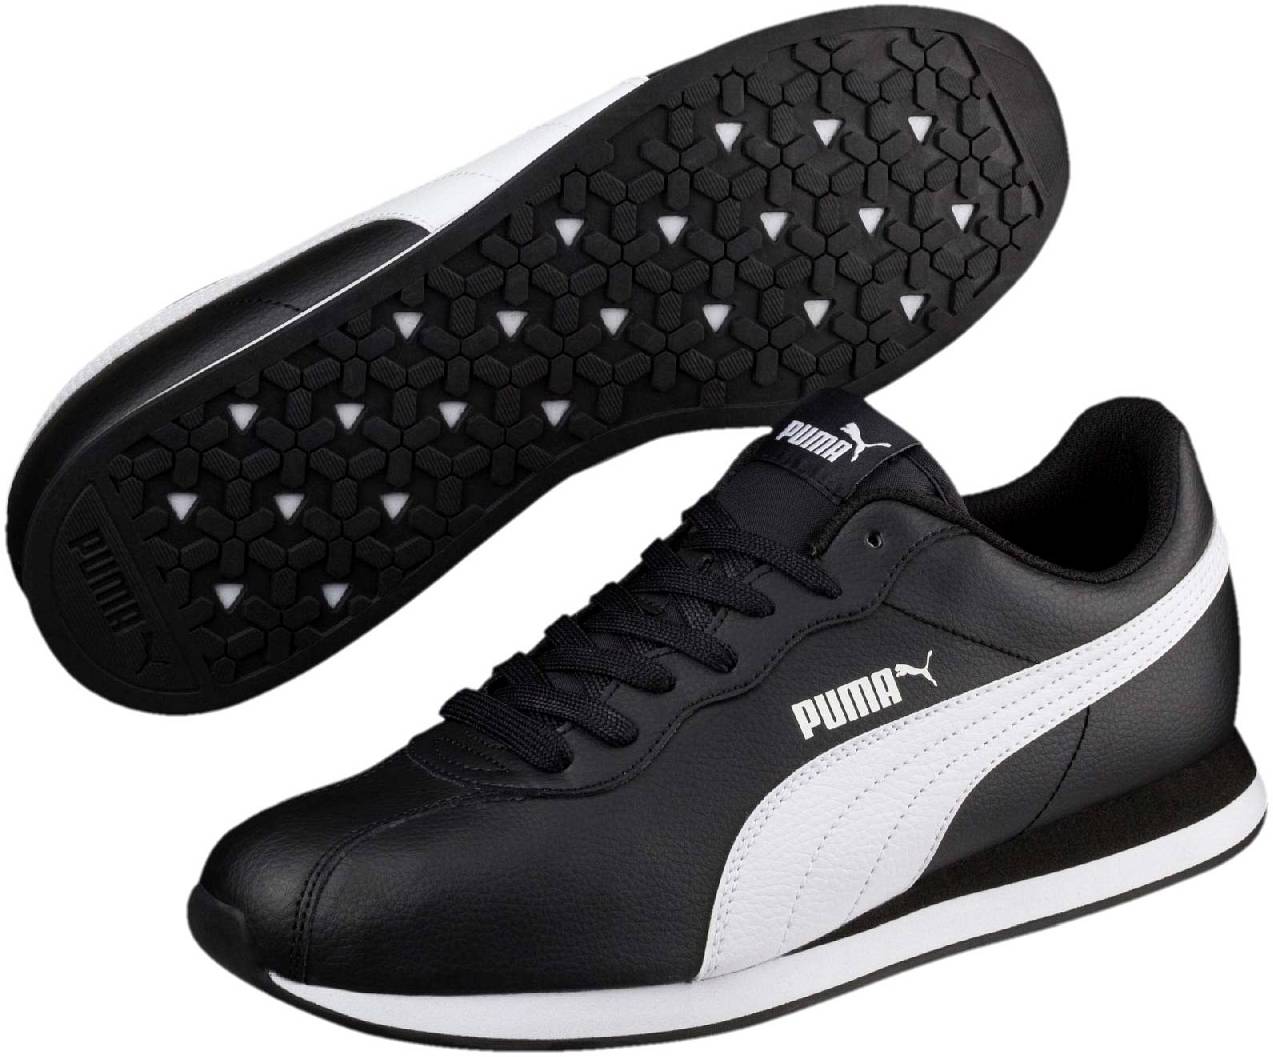 Puma Turin II – Shoes Reviews & Reasons To Buy